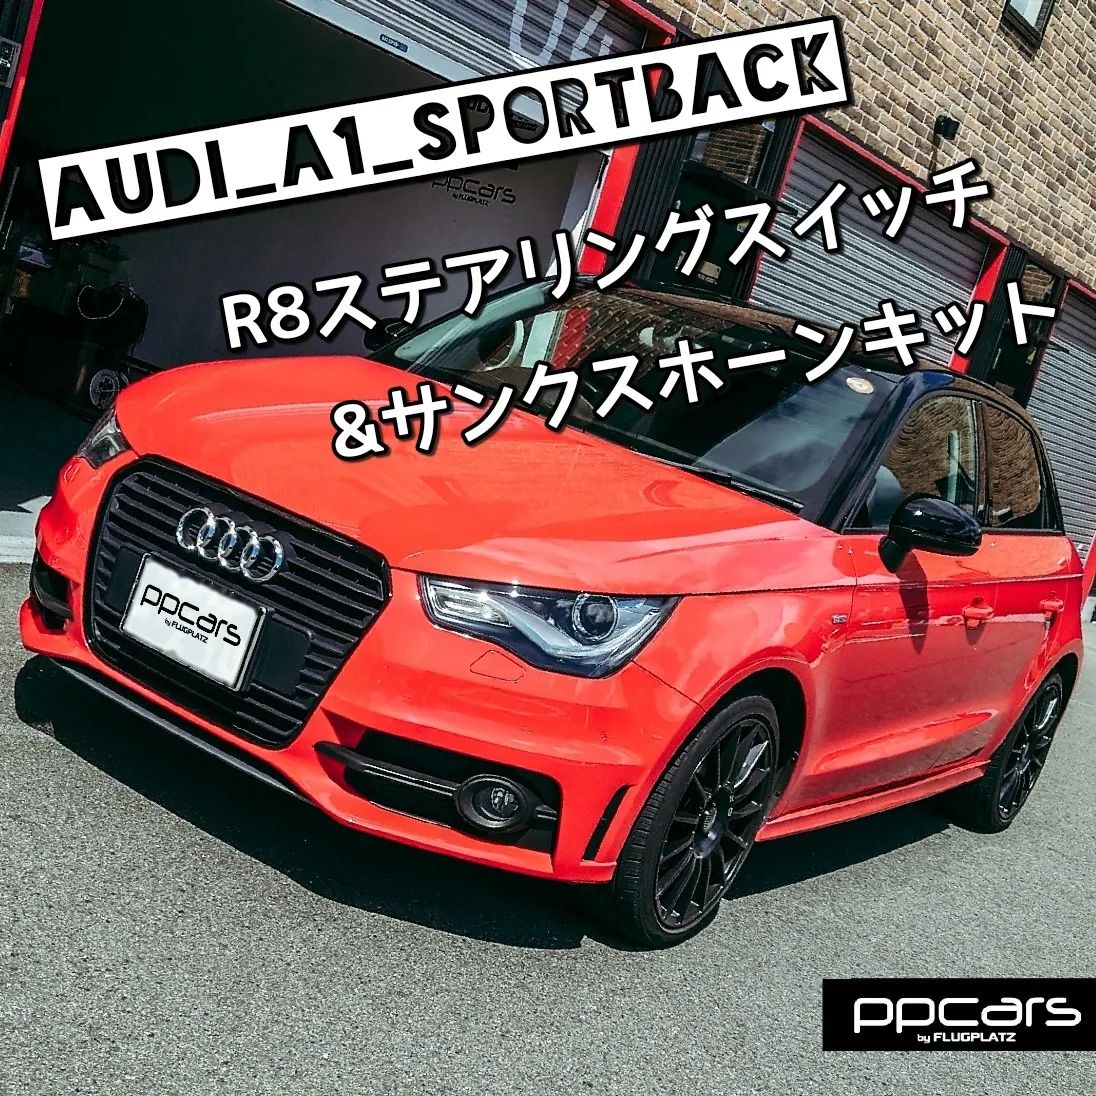 Audi A1(8X) Sportback x R8ステアリングスイッチ&サンクスホーンキット